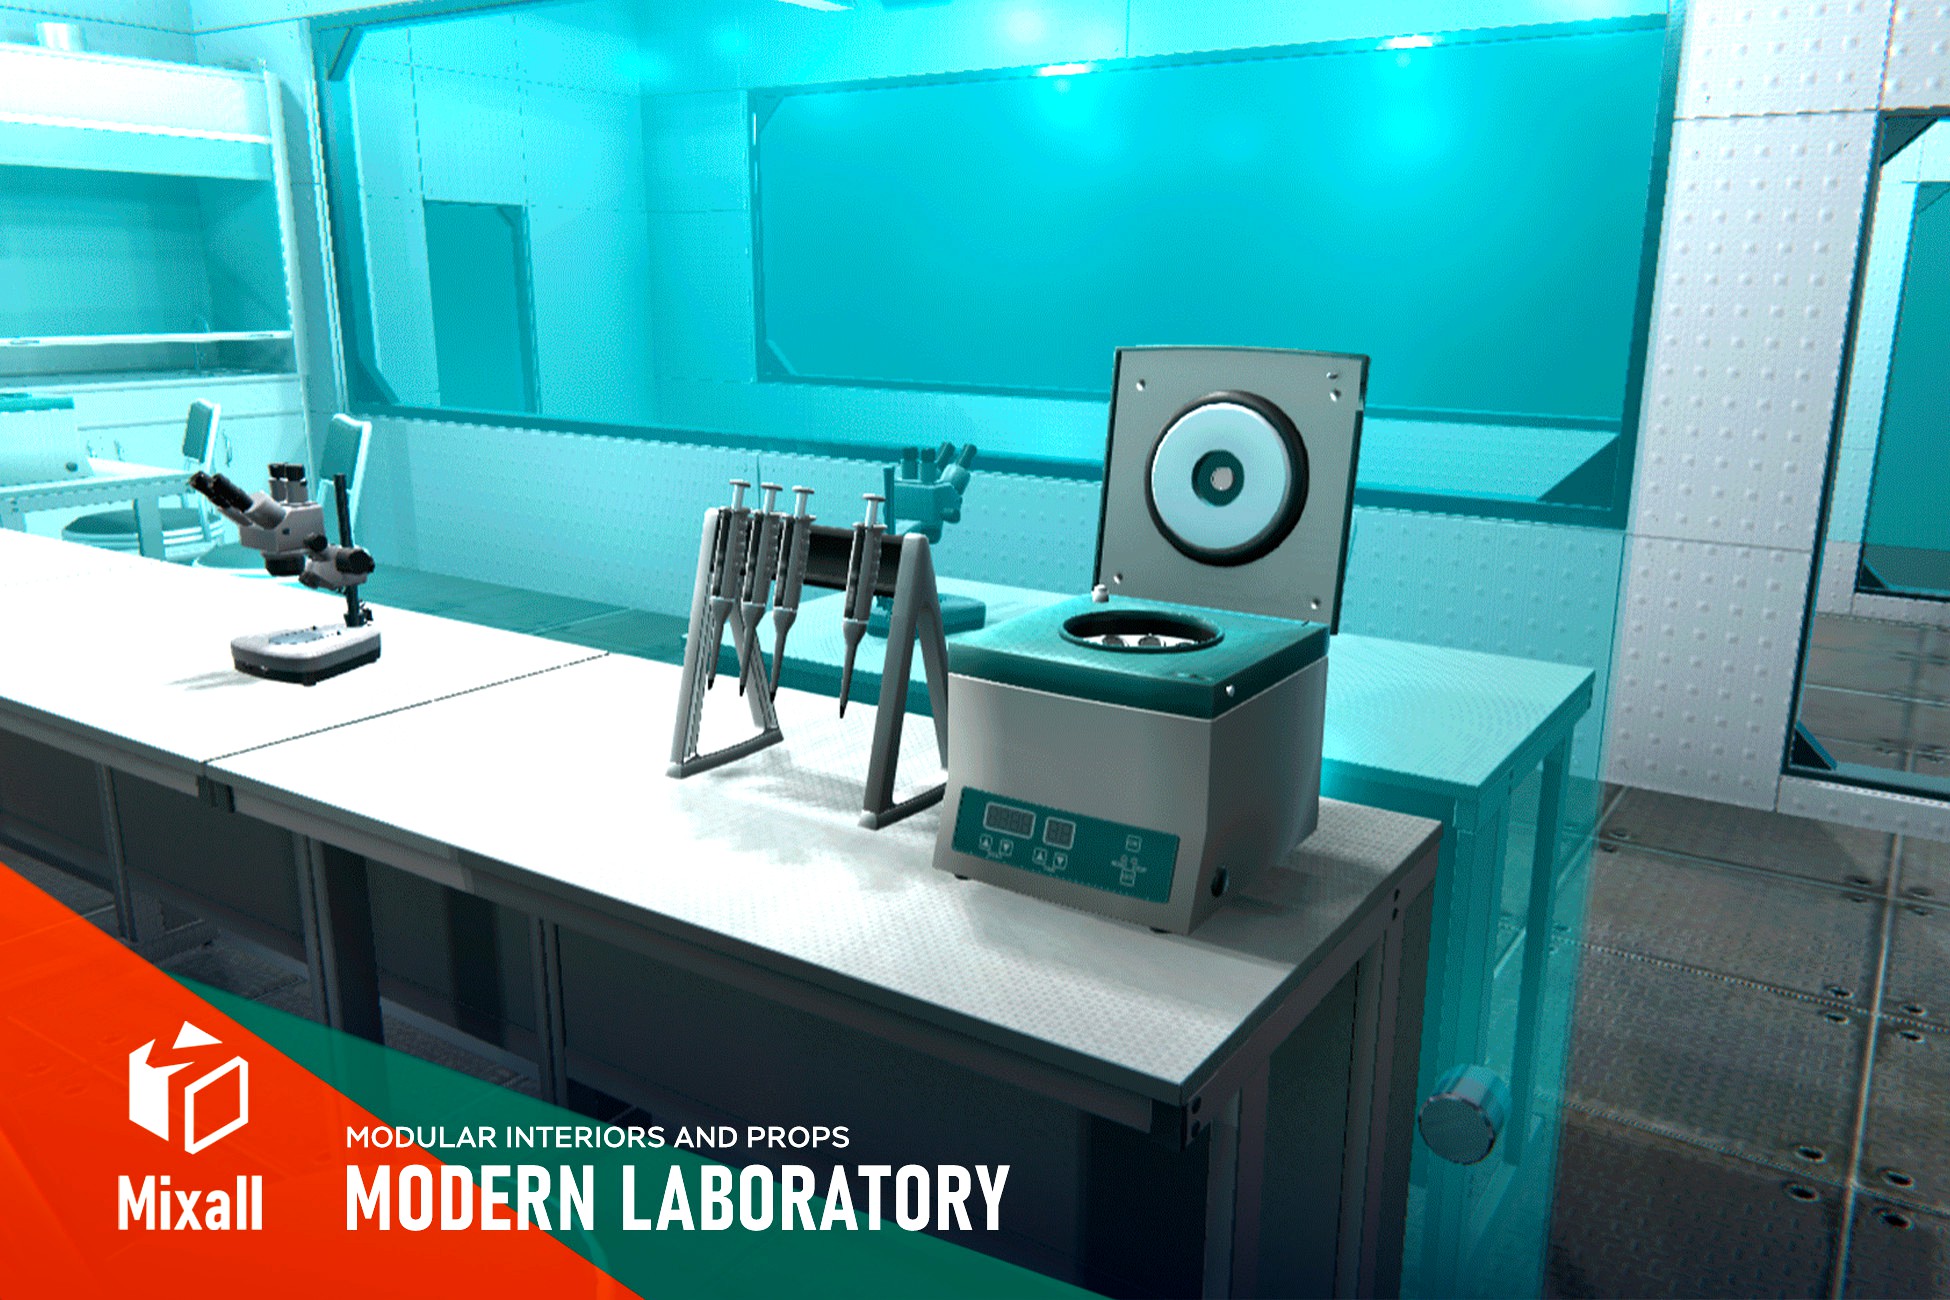 Modern laboratory - modular interiors and props